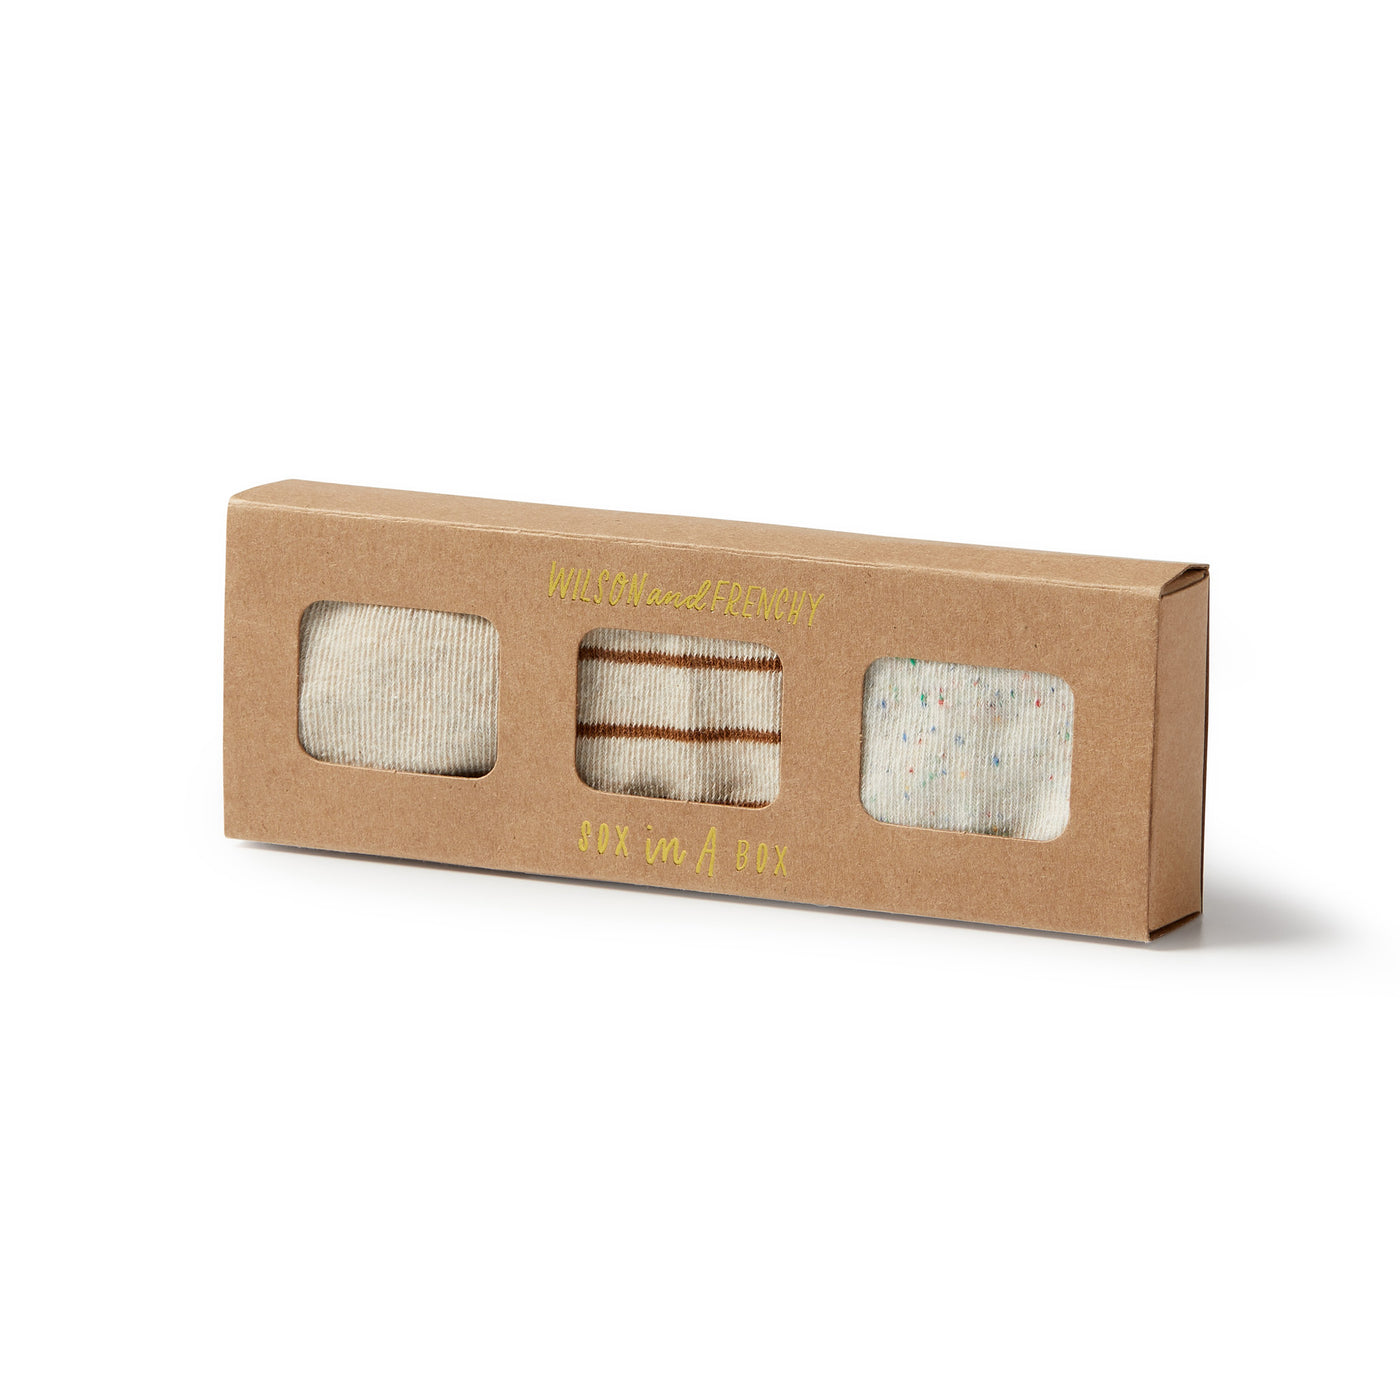 Wilson & Frenchy Organic 3 Pack Baby Socks | Oatmeal / Nimbus Cloud / Dijon